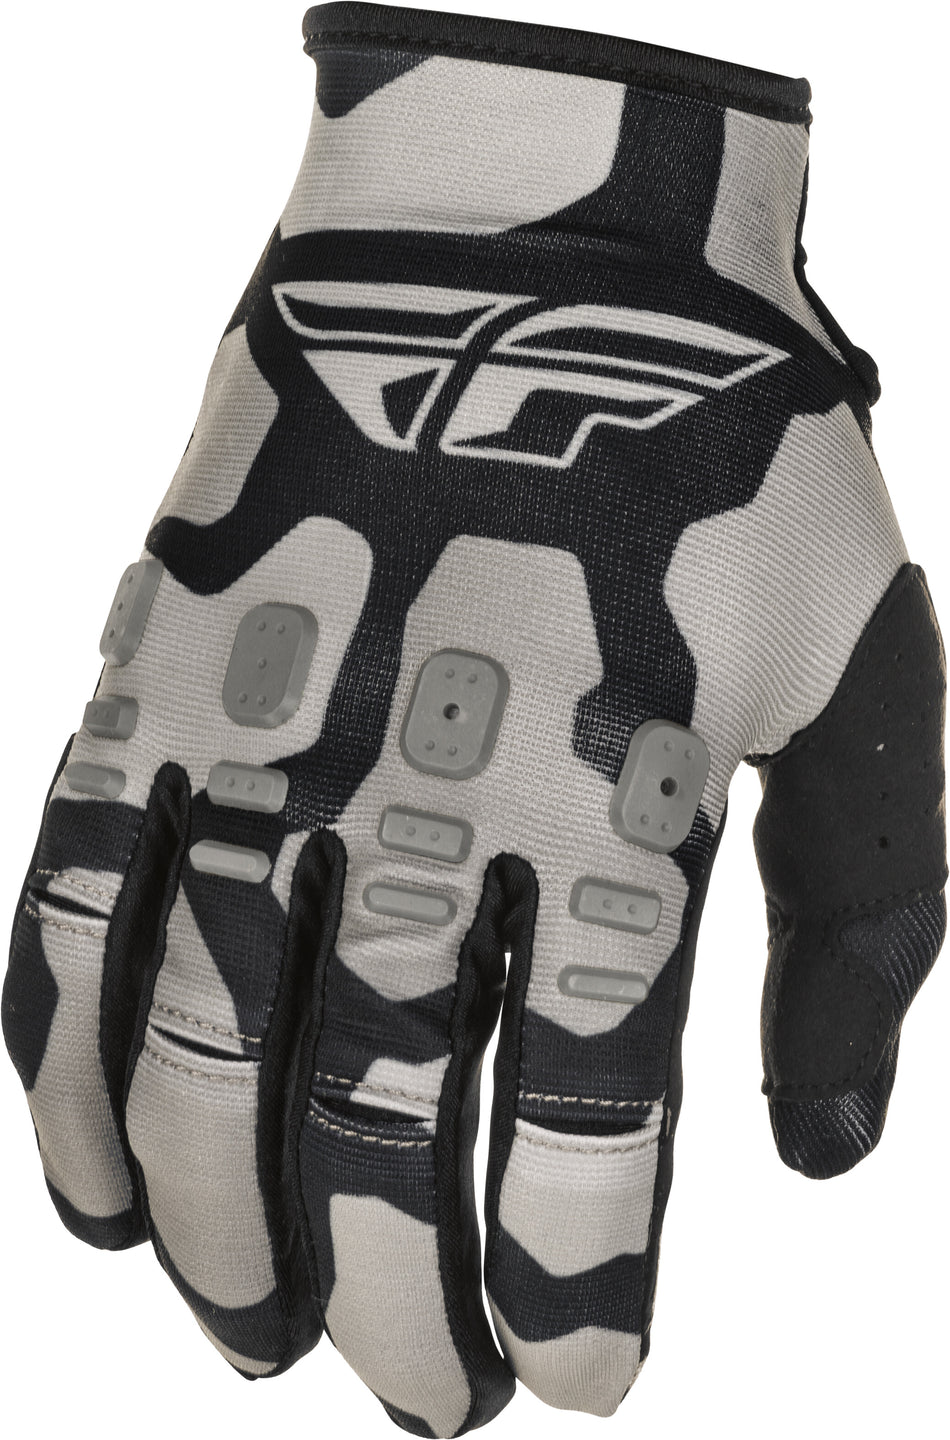 FLY RACING Kinetic K221 Gloves Black/Grey Sz 12 374-51012